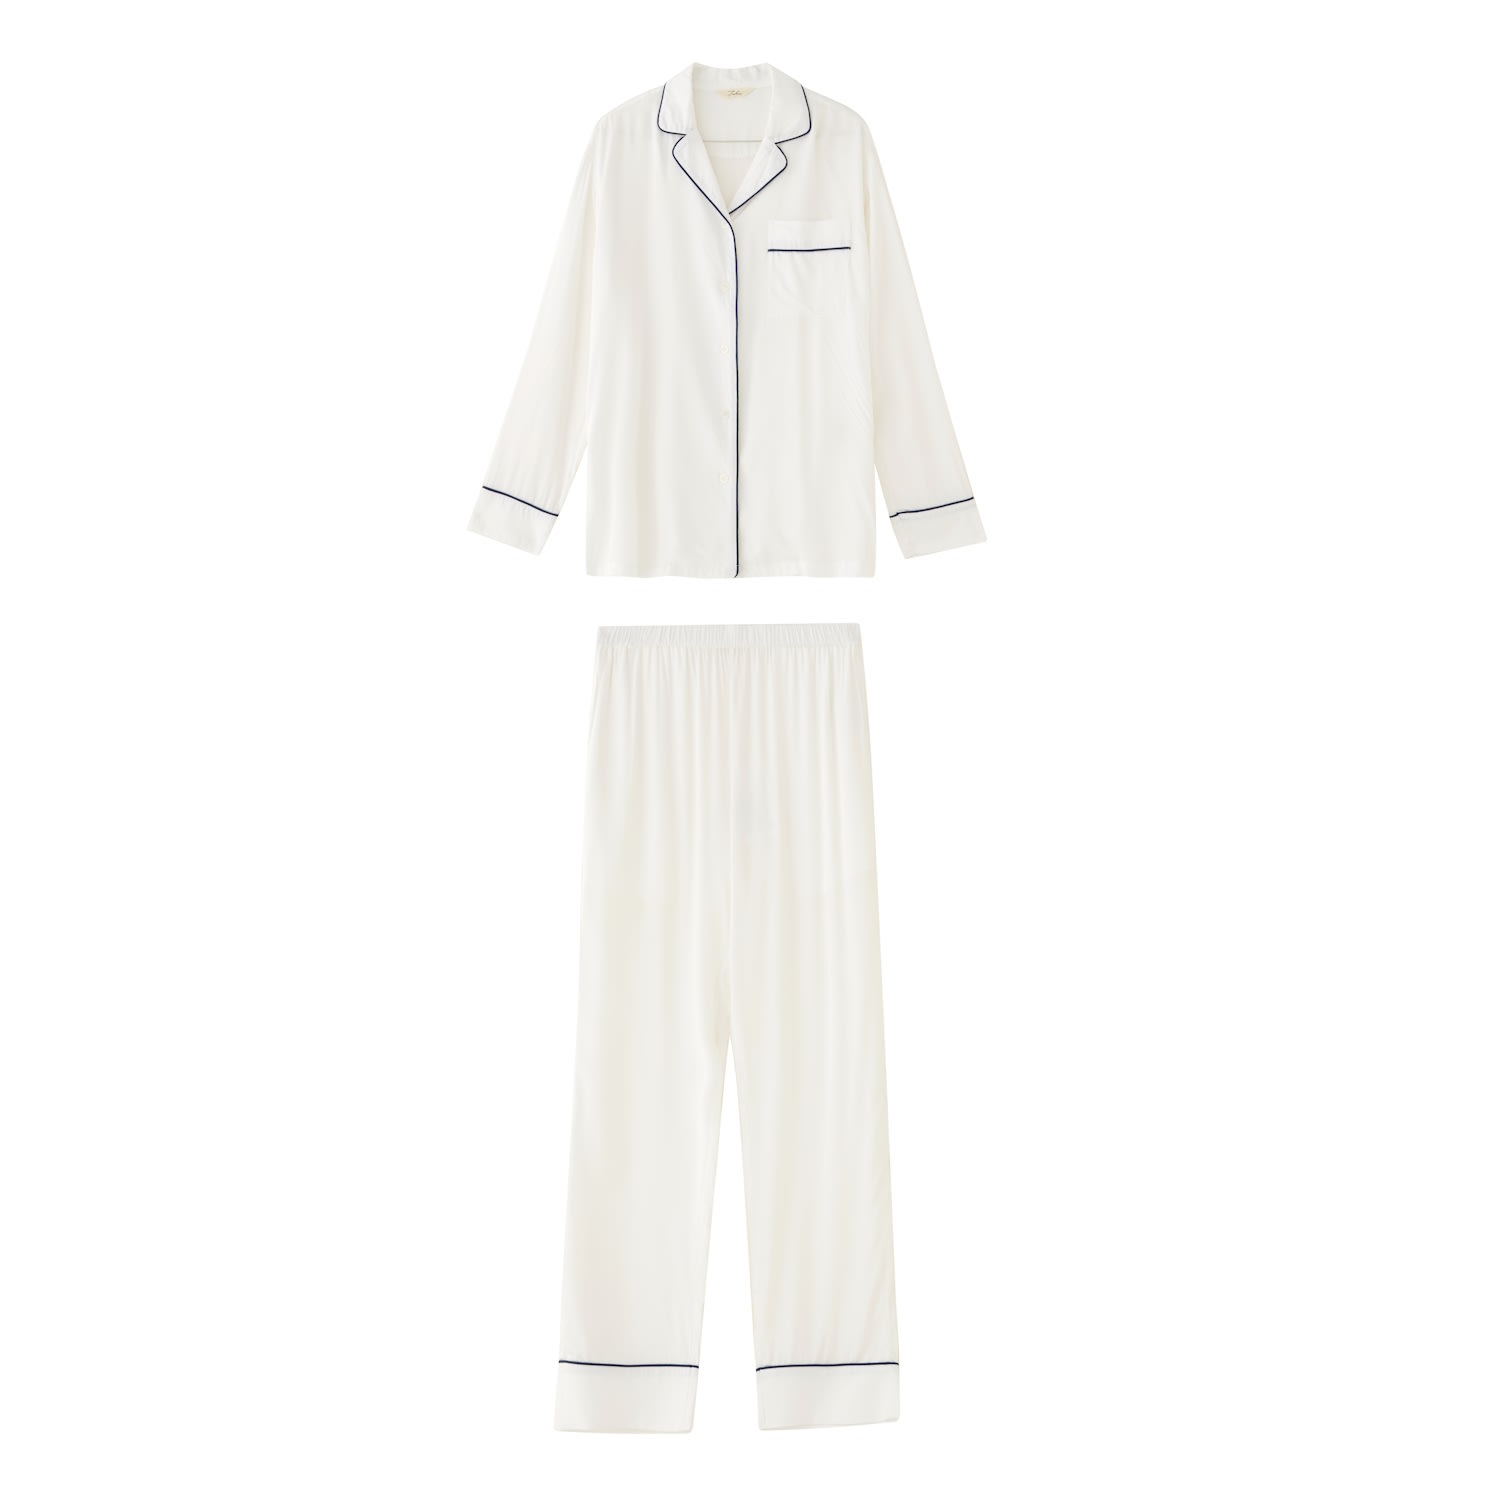 Men’s Comfort Bamboo Pajama Set - White Medium Notlabeled